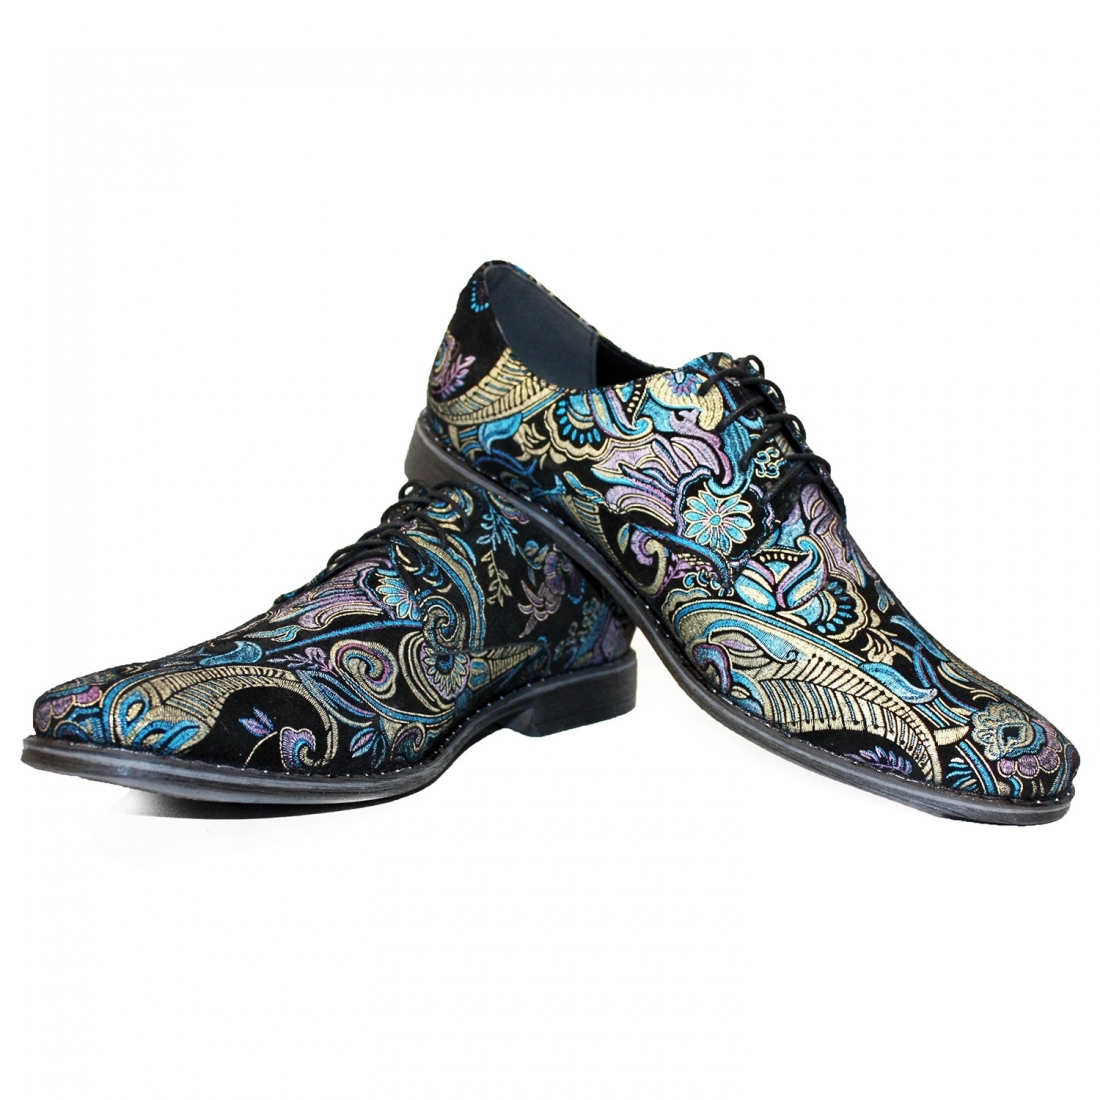 Modello Shpanerro - クラシックシューズ - Handmade Colorful Italian Leather Shoes